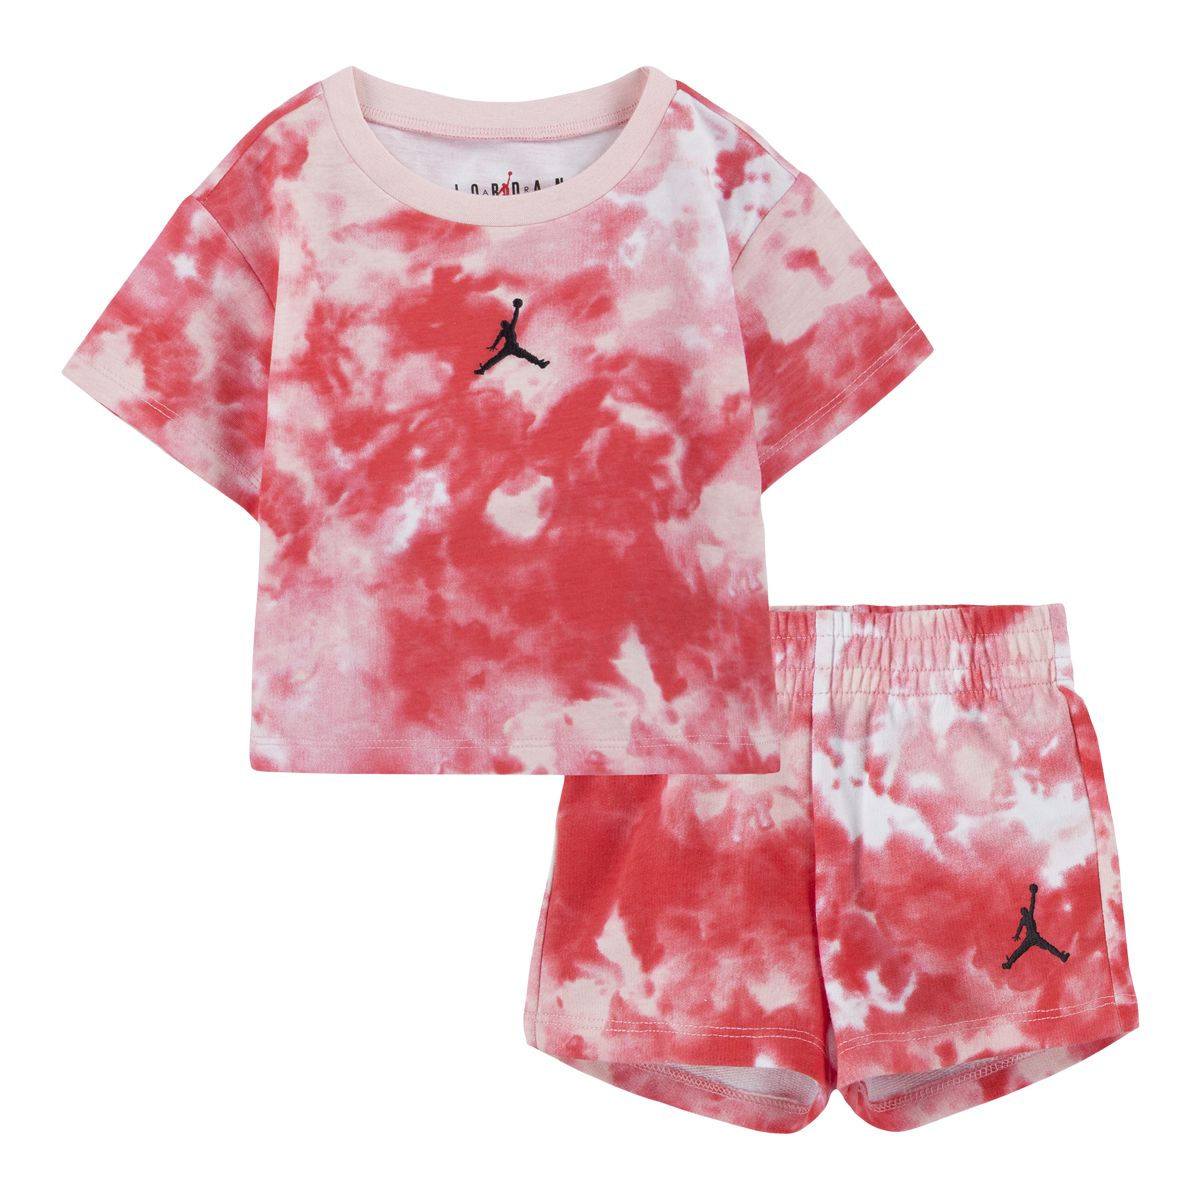 Toddler Blue Jays Follow Through T Shirt Short Set